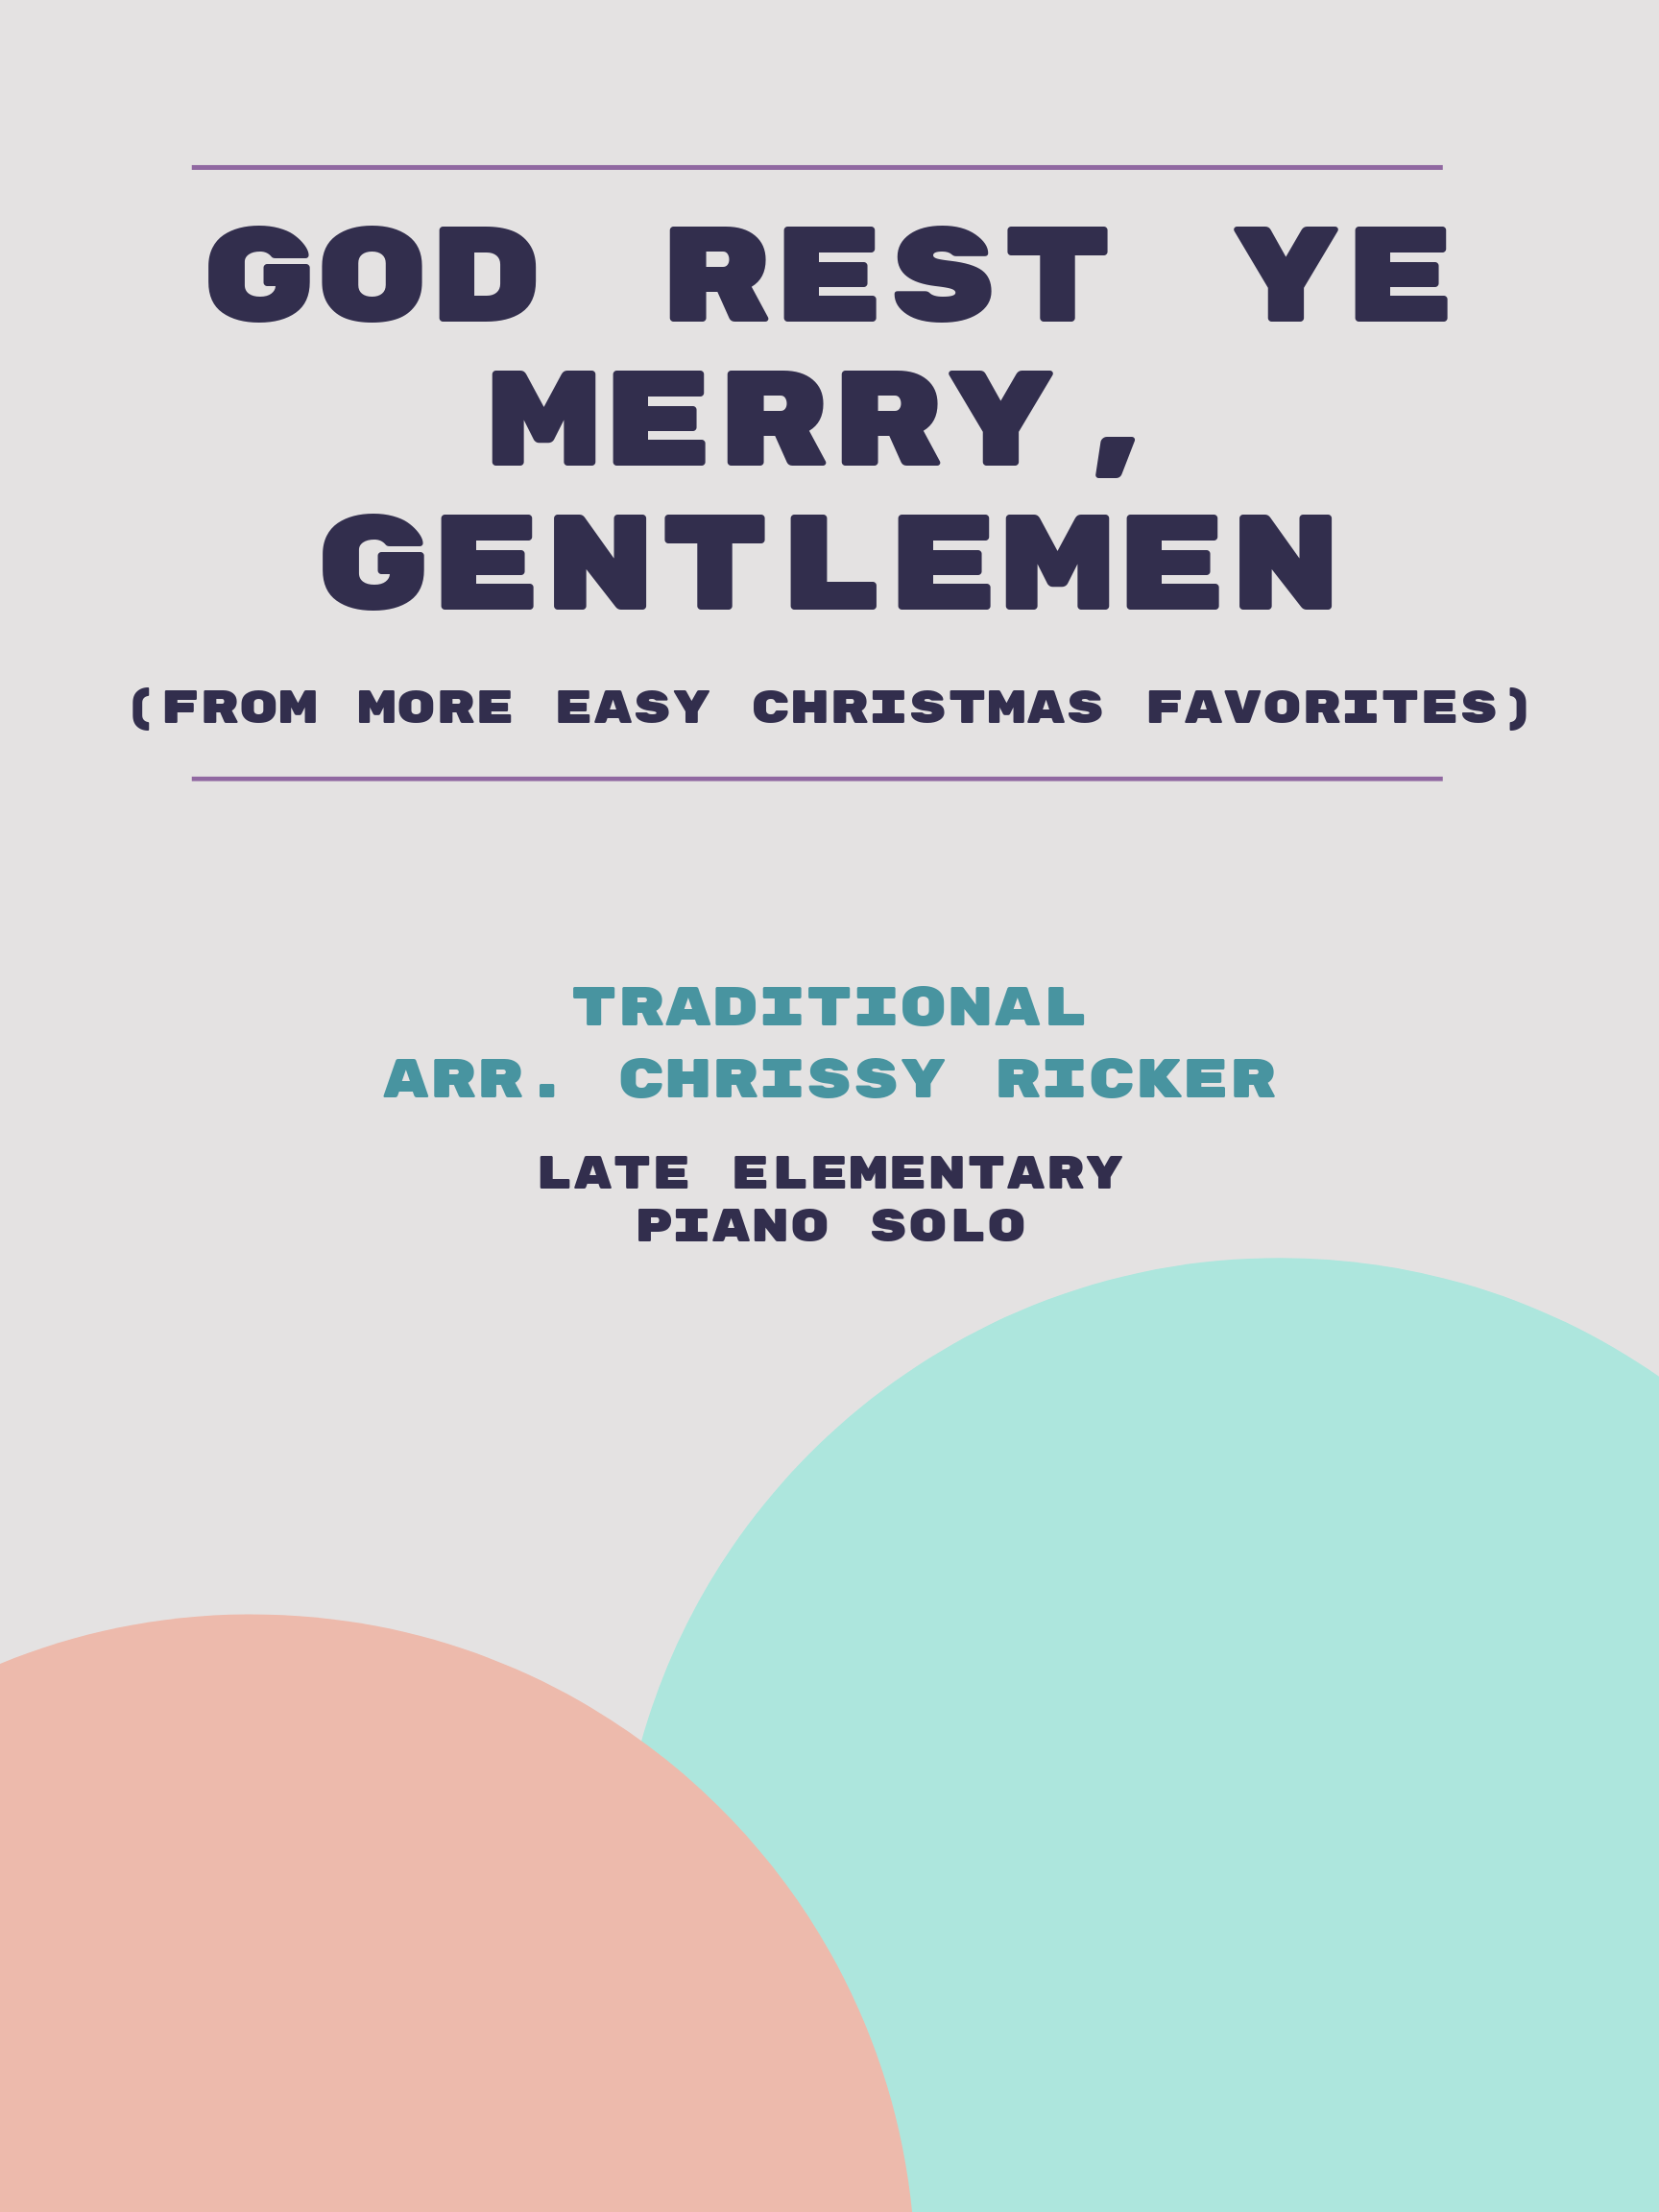 God Rest Ye Merry, Gentlemen by Traditional